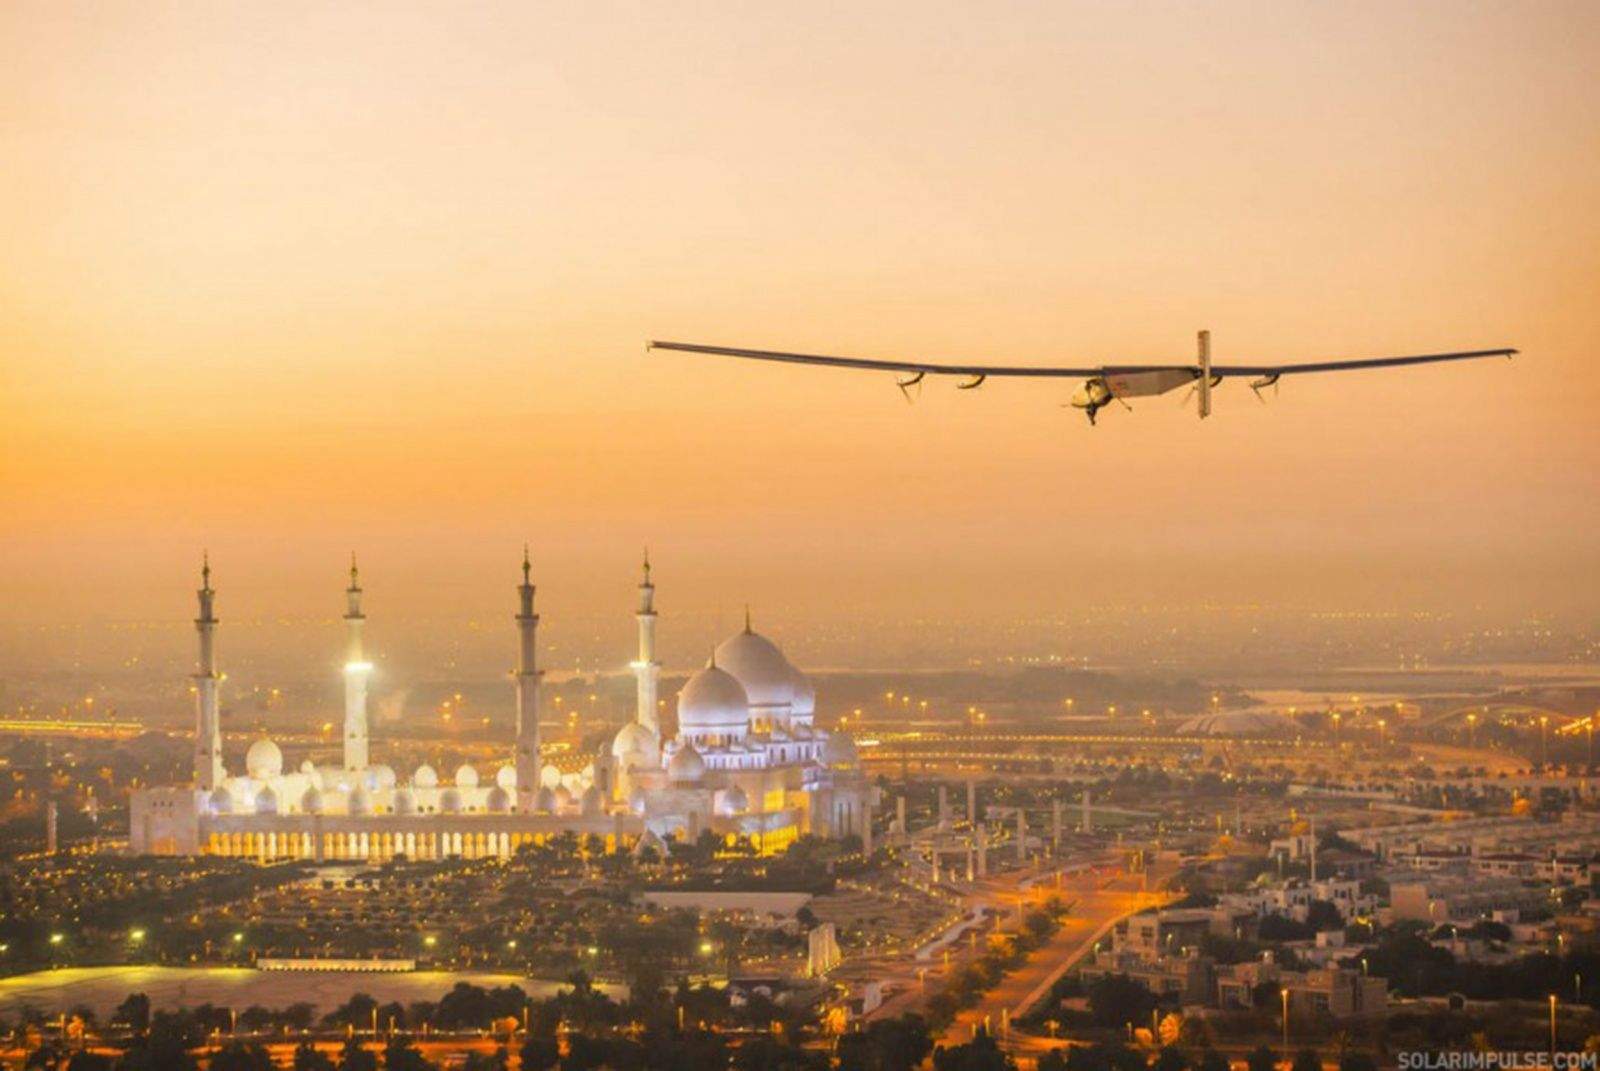 The Solar Impulse 2 will attempt an around-the-world flight powered by the sun. Photo: Solar Impulse